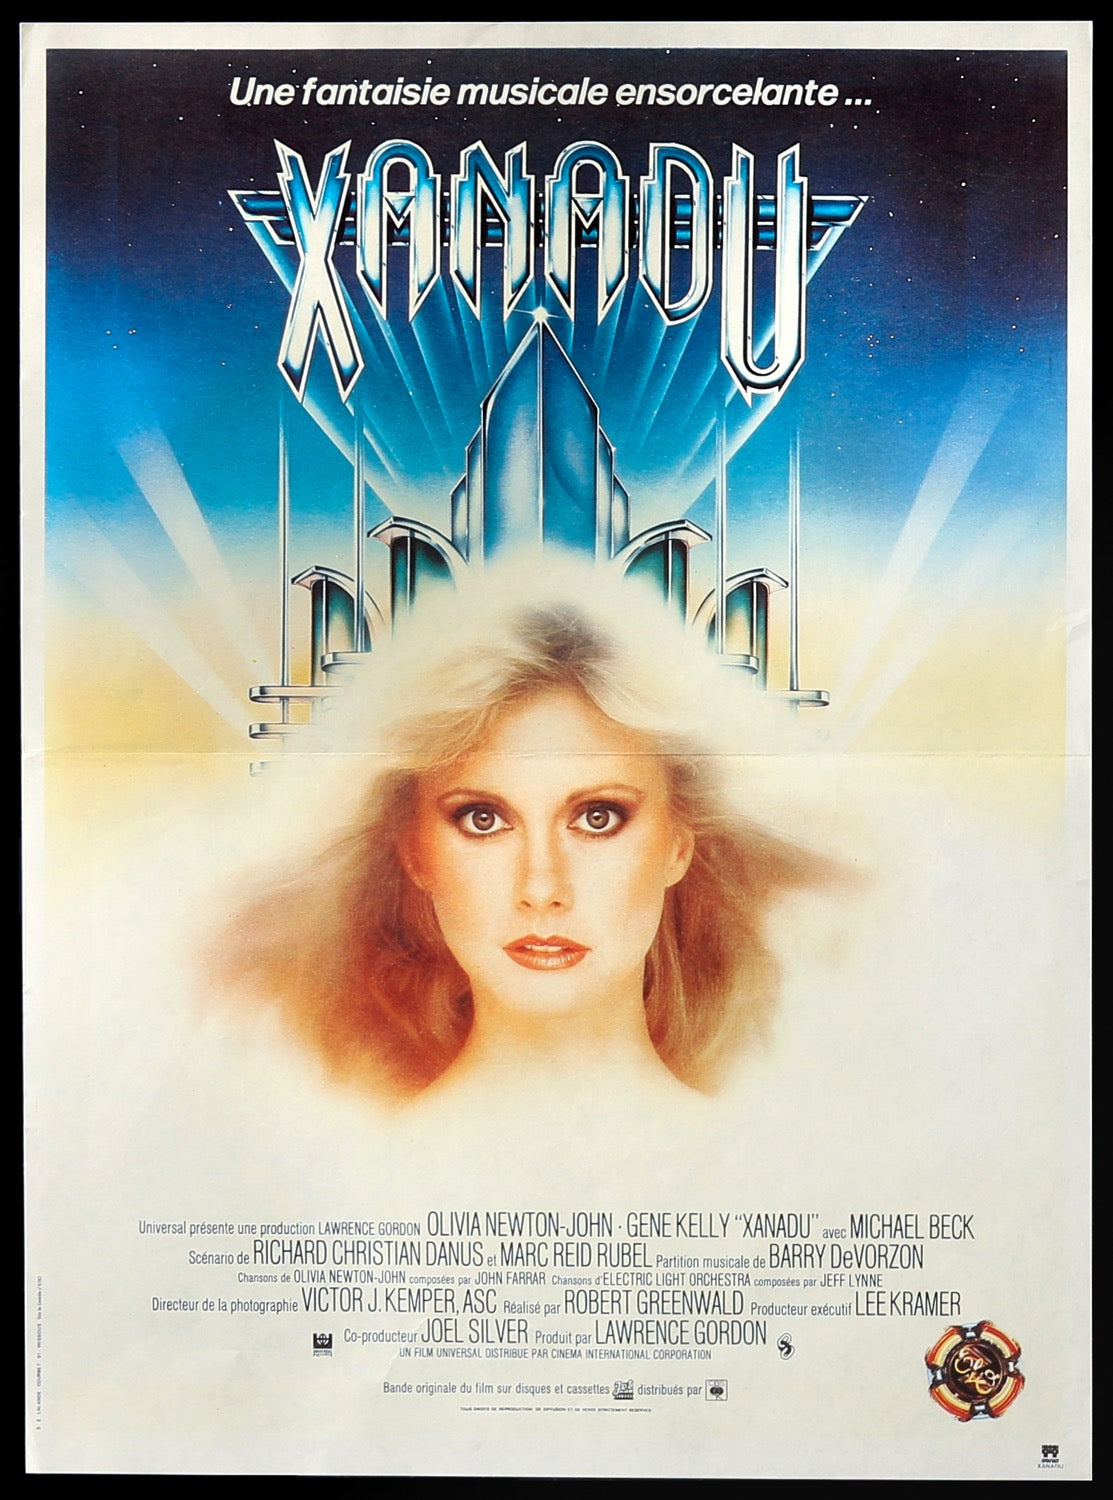 Xanadu (1980) original movie poster for sale at Original Film Art